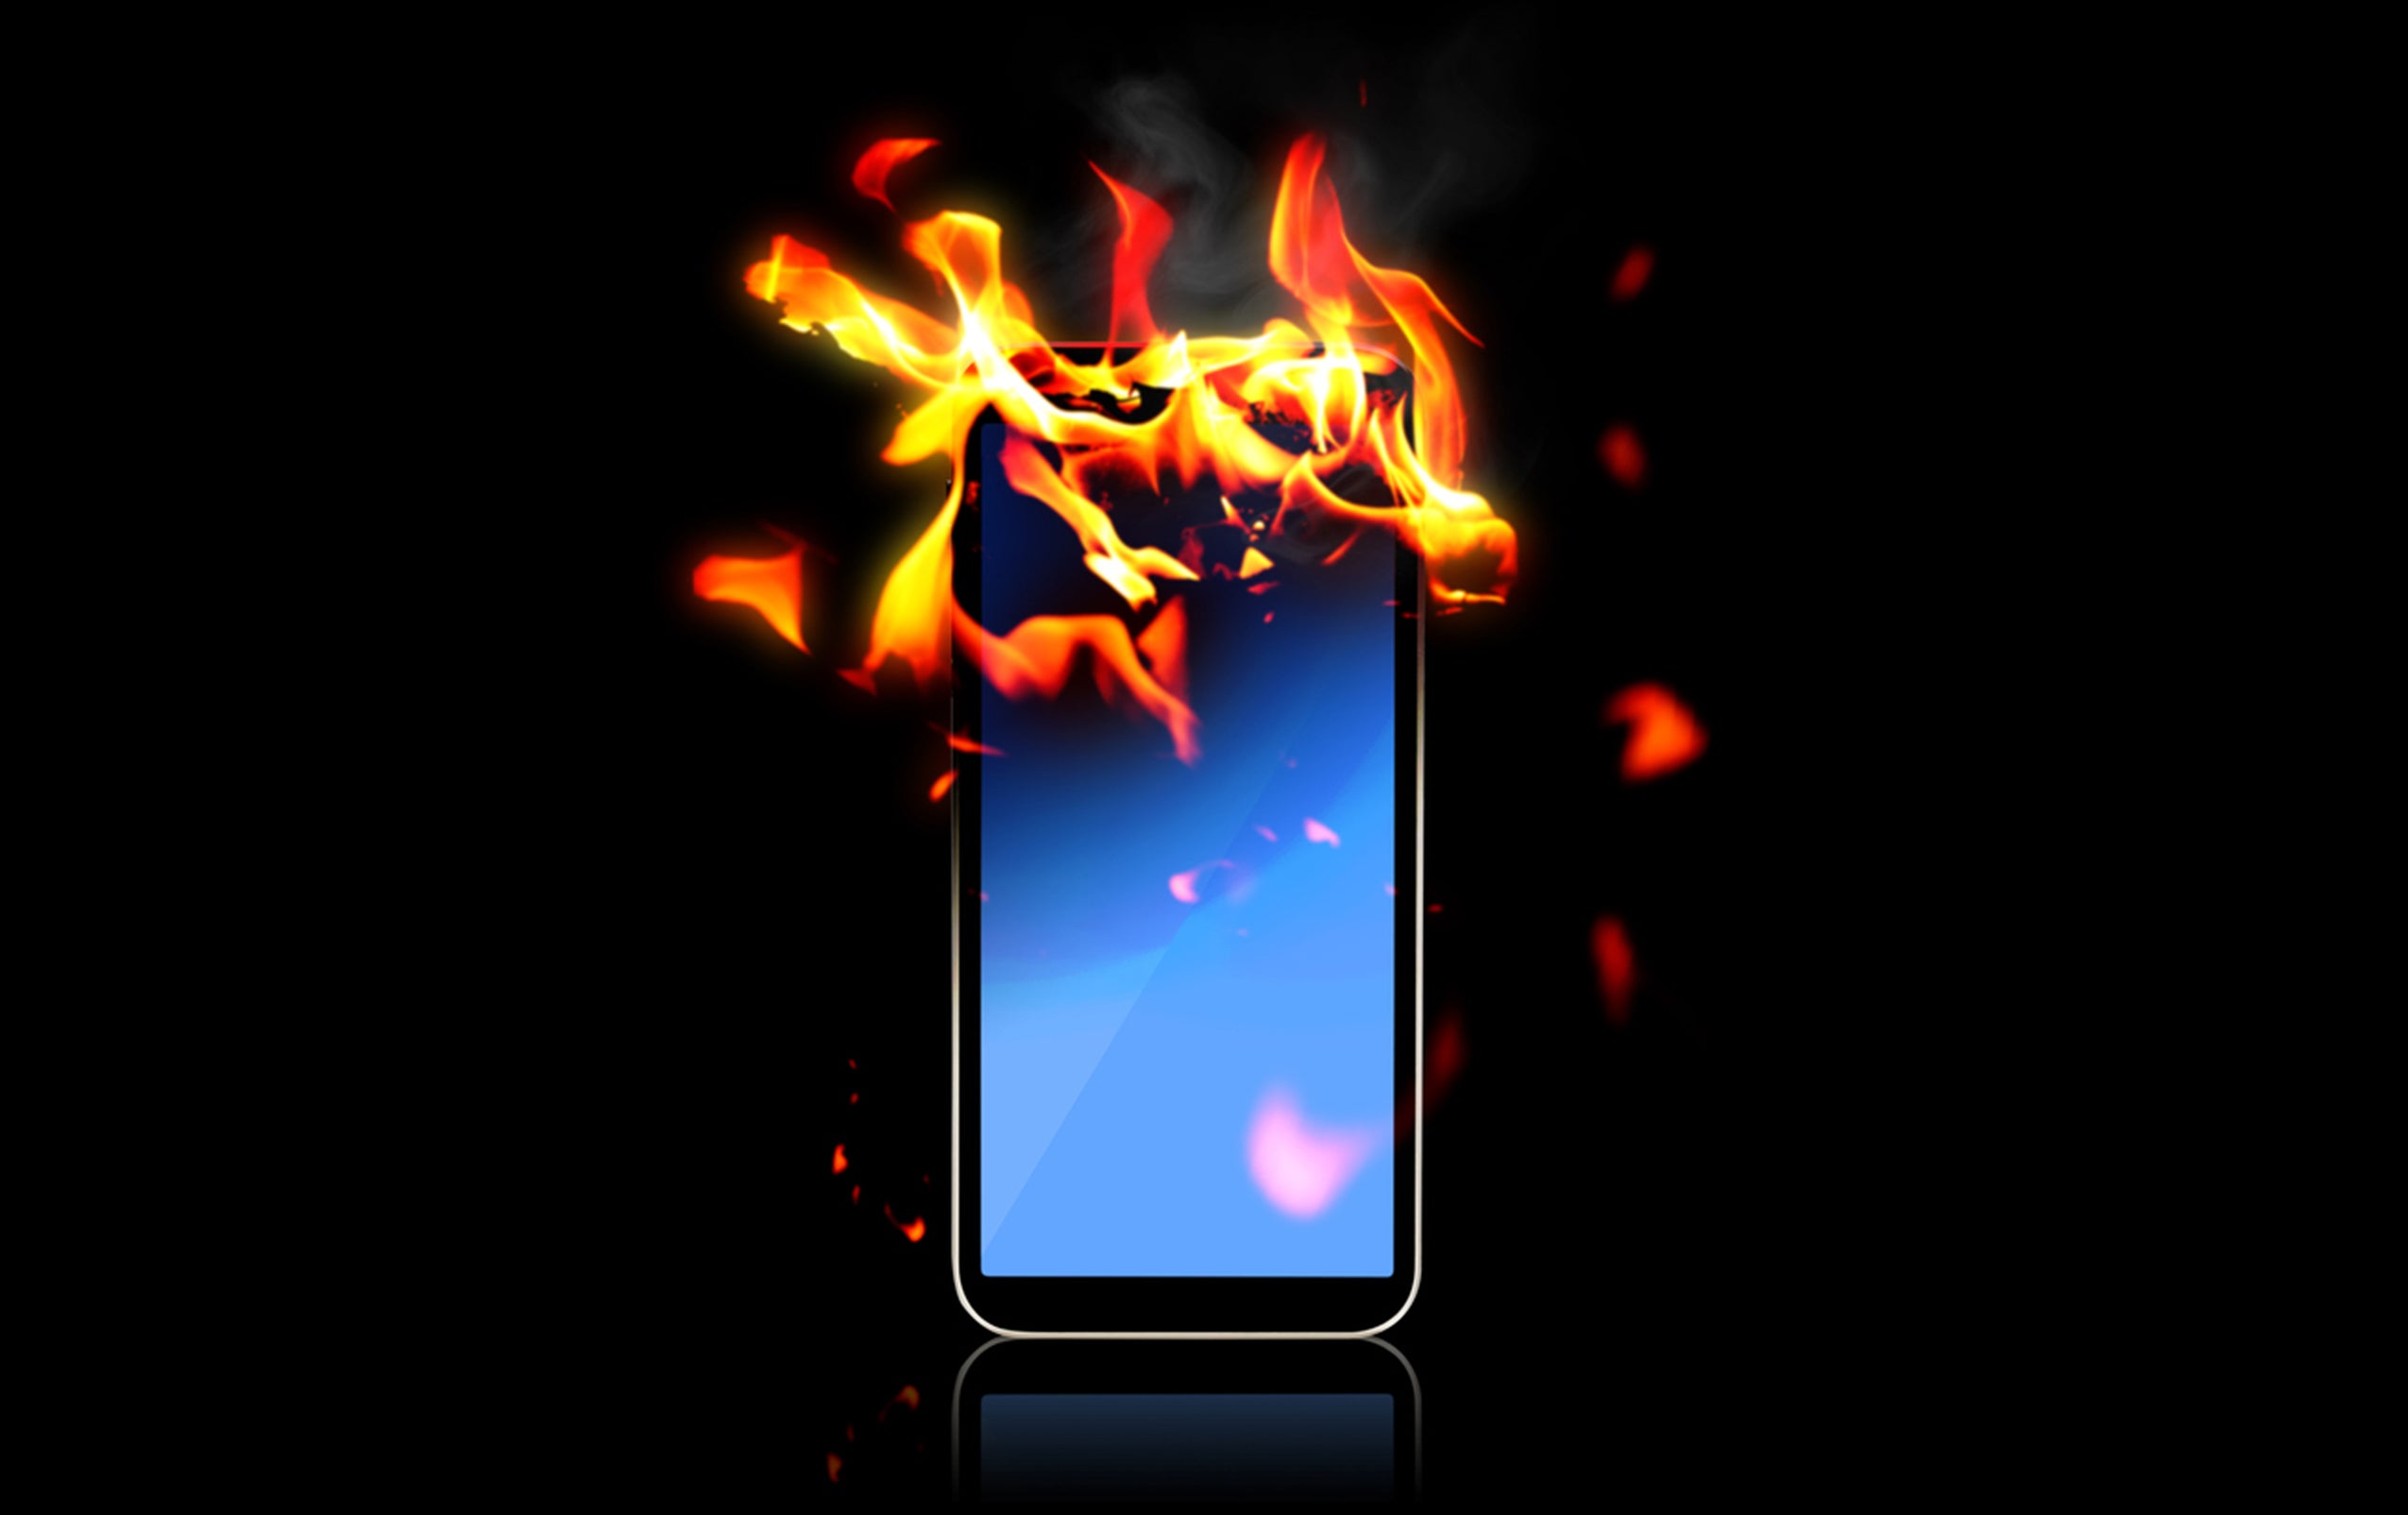 Burning smartphone